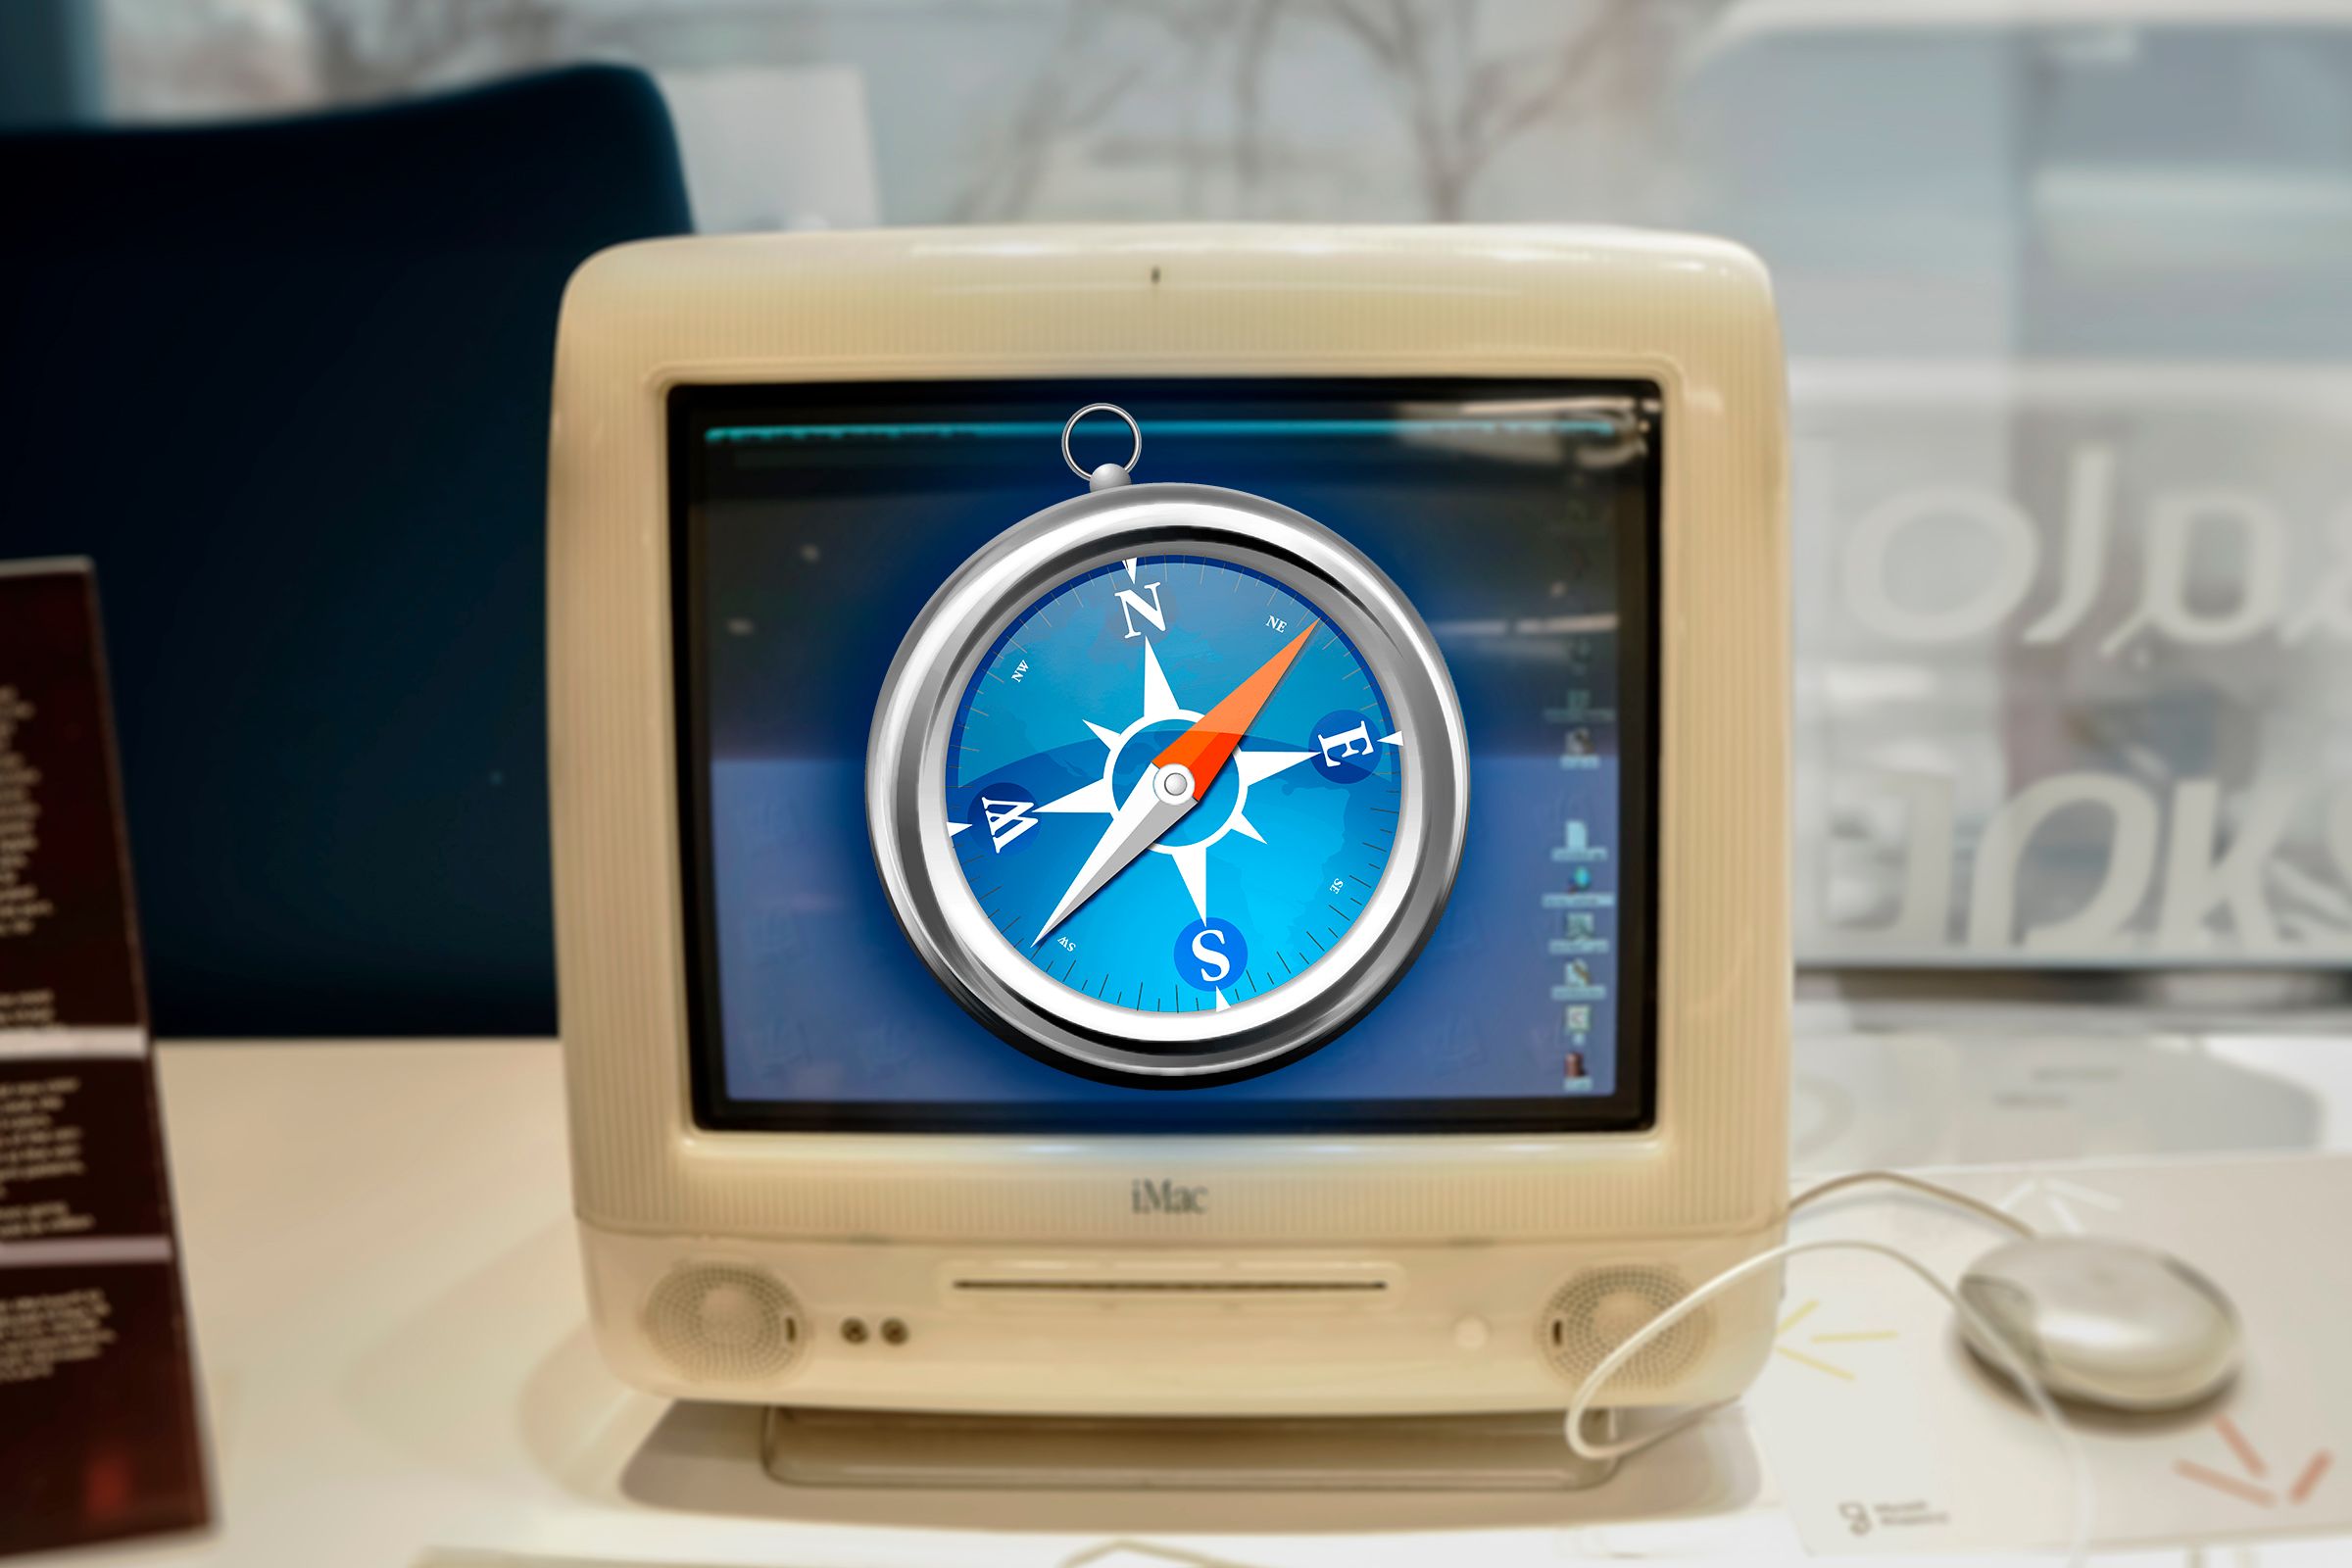 An iMac G3 with the old Safari logo.